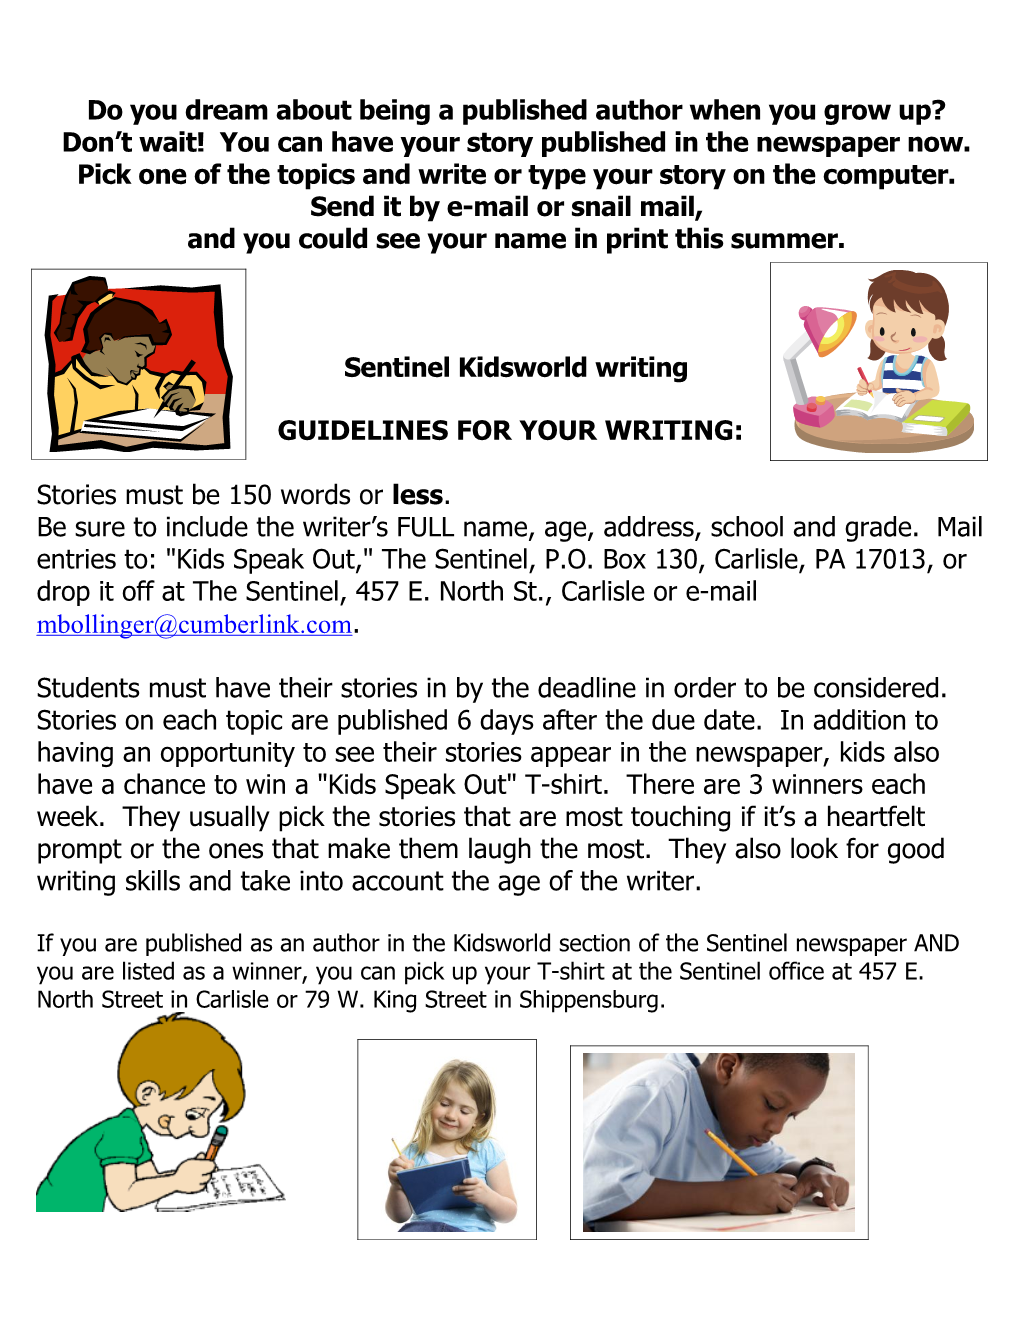 Topics for Sentinel Kidsworld Writing